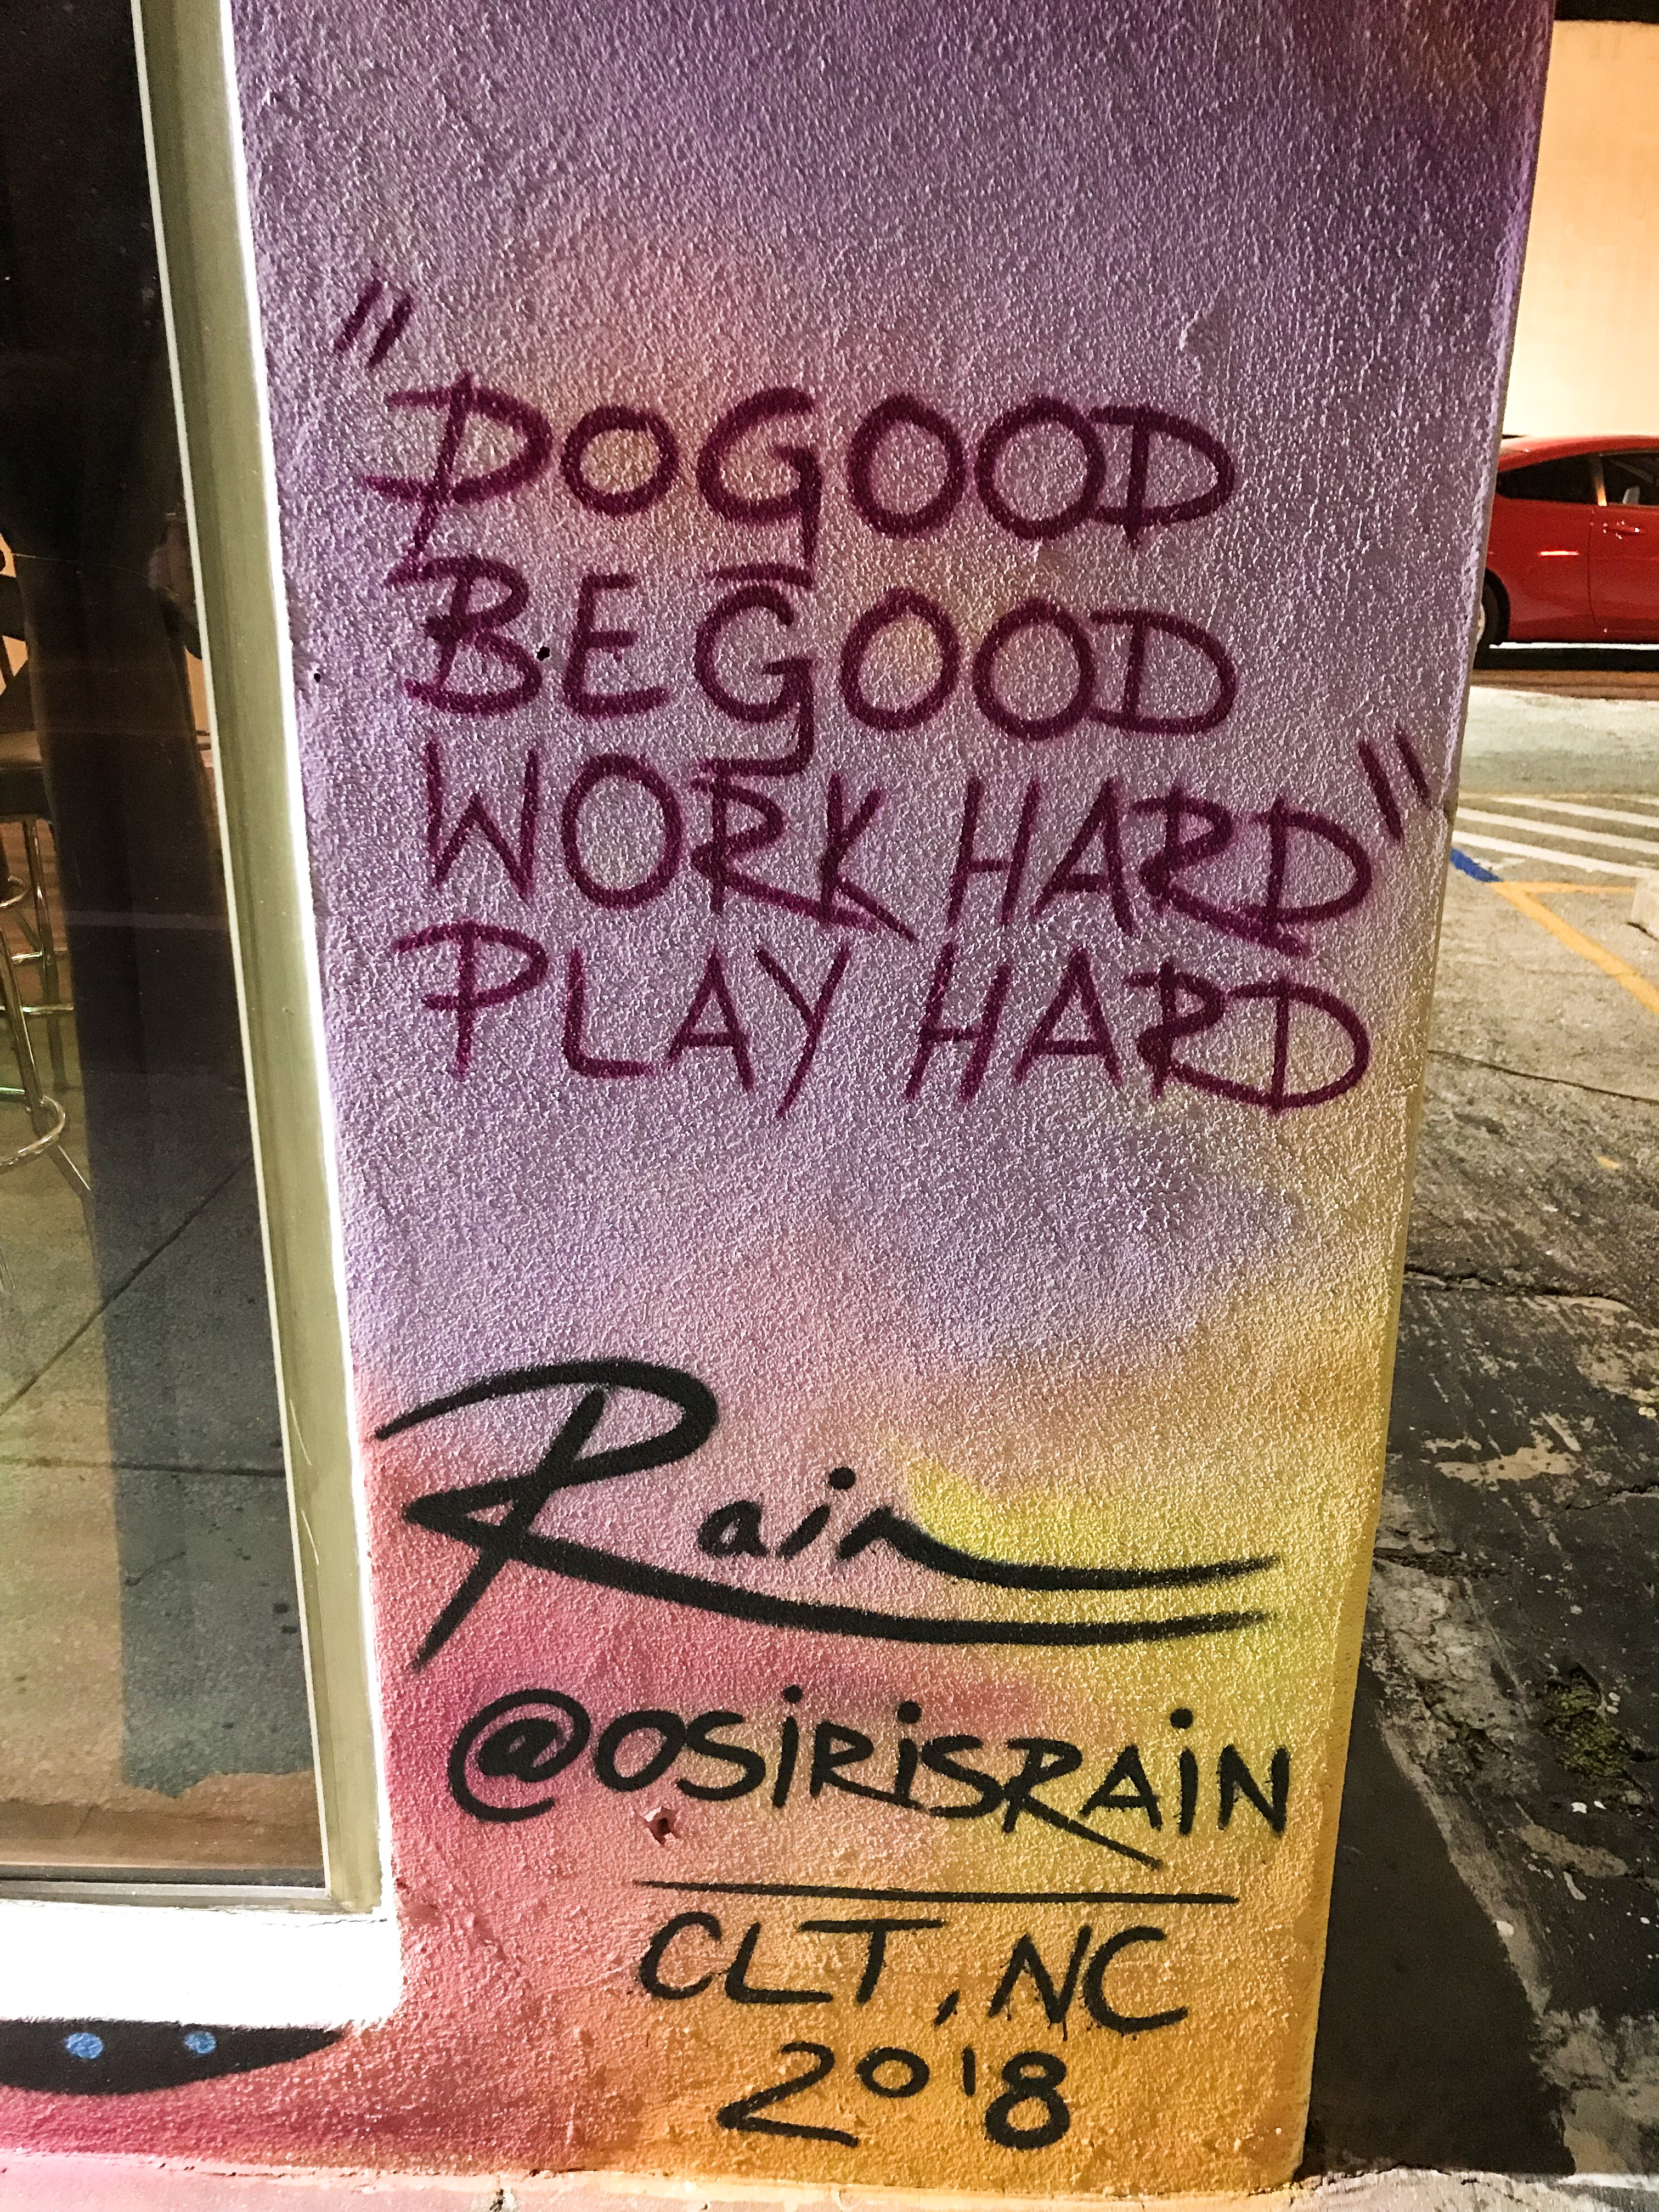 Quote and Signature by Osiris Rain